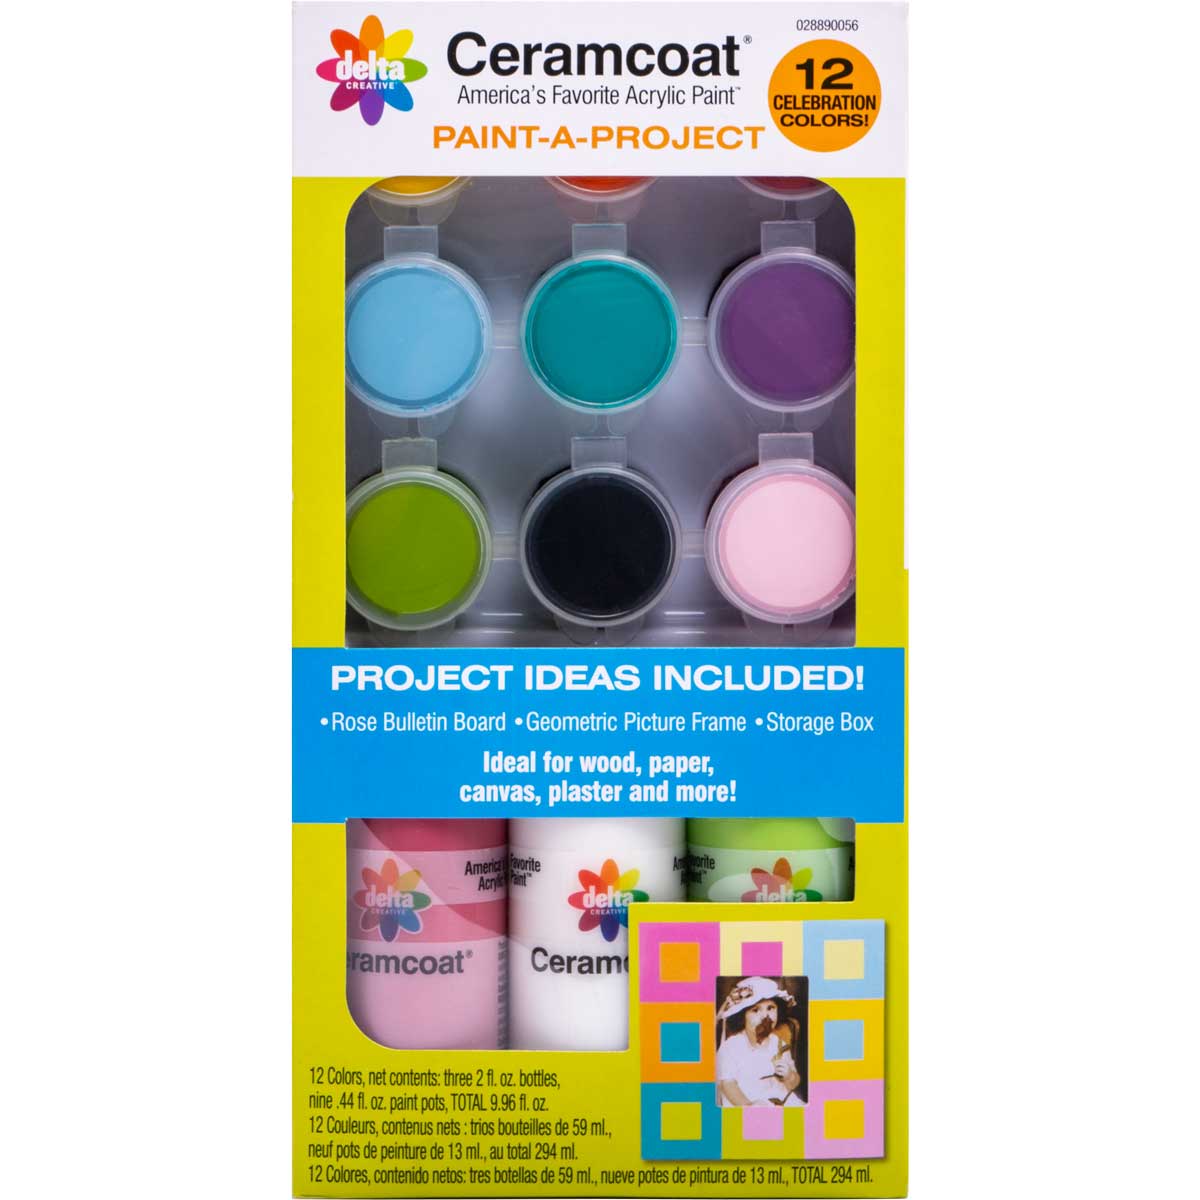 DELTA CERAMCOAT Acrylic Paint A Project Set 12 CELEBRATION COLORS New! Gift  Set